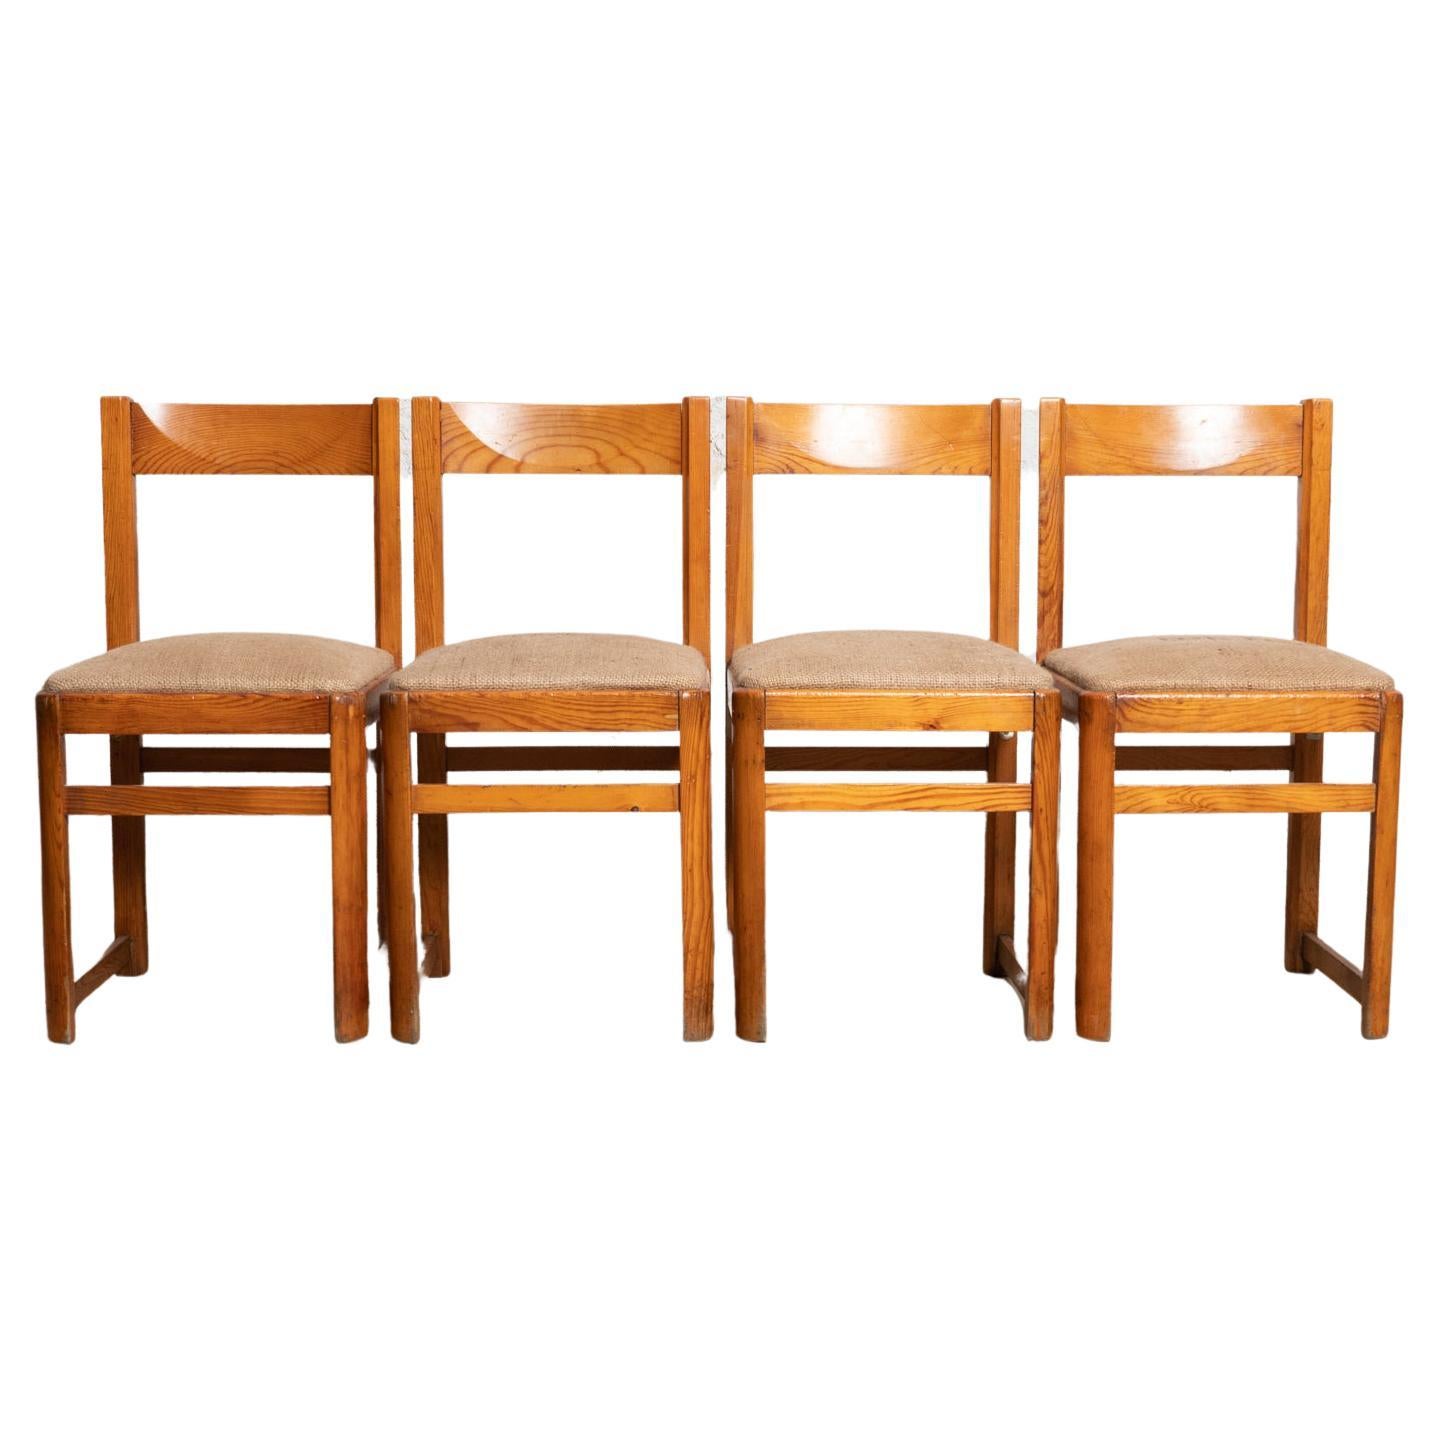 Set of 4 Chairs Jordi Vilanova Aran Chairs, circa 1960 